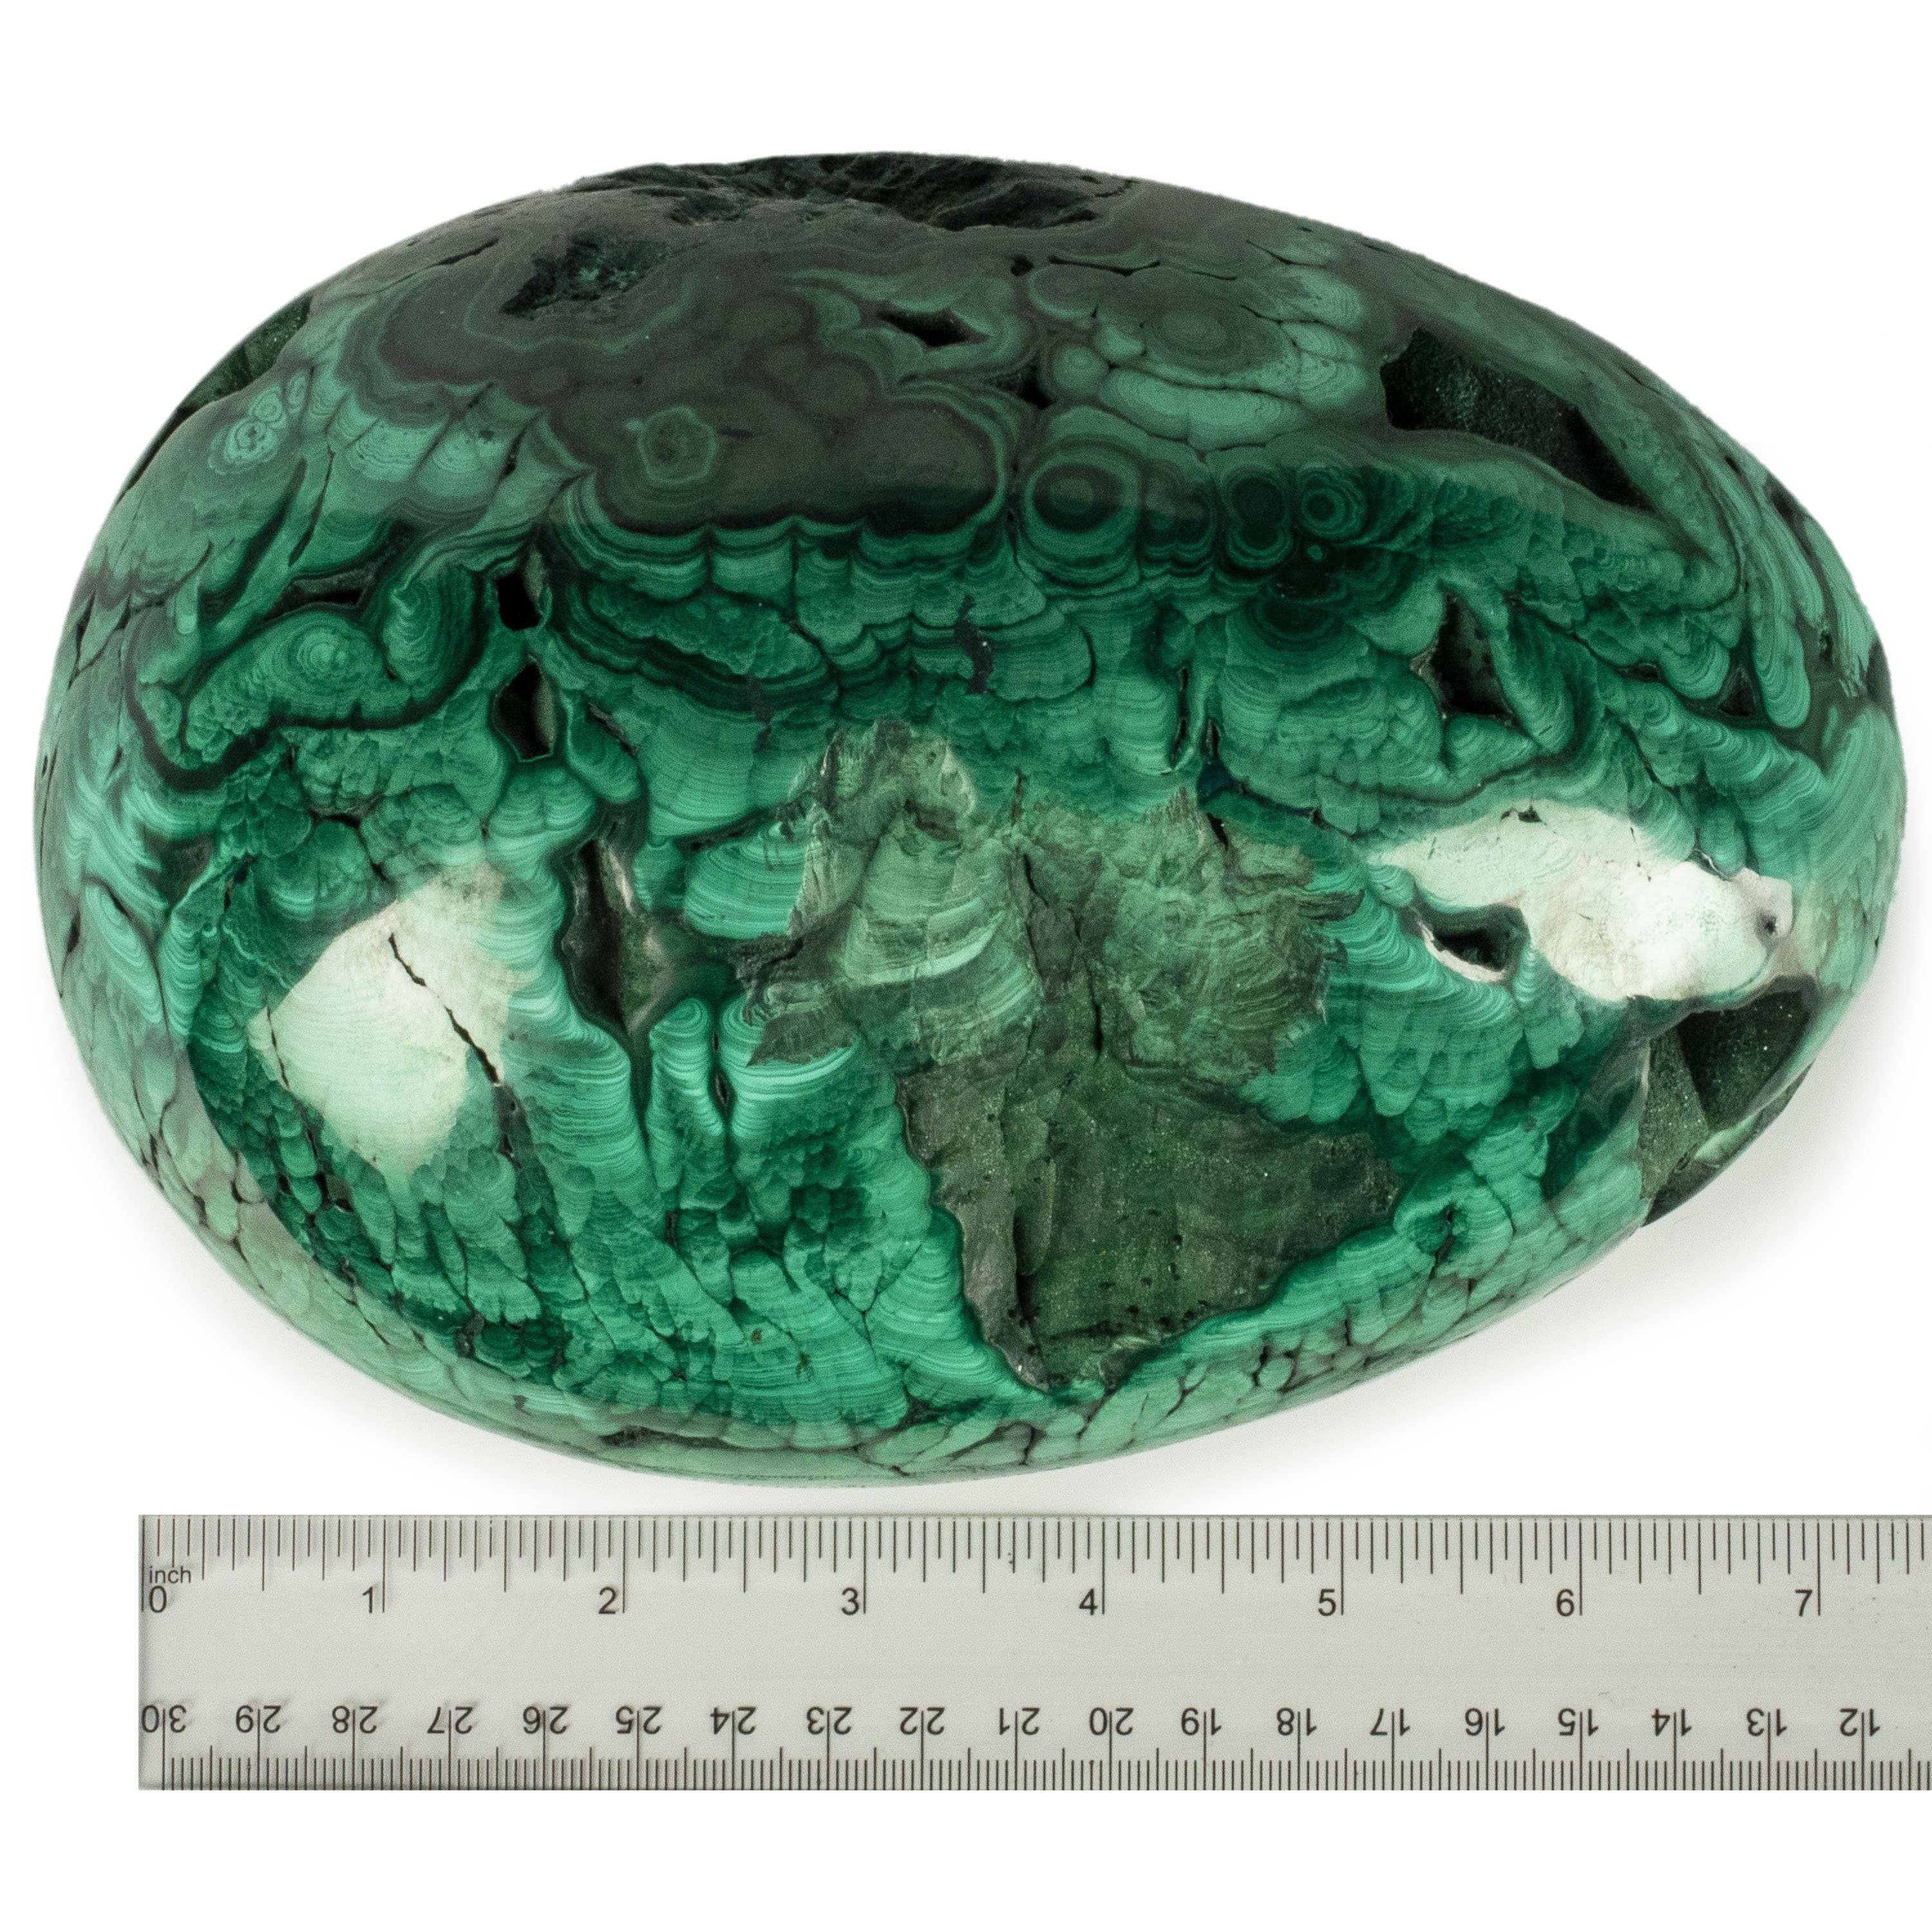 Kalifano Malachite Rare Natural Green Malachite Egg Carving from Congo - 7.5 in / 12.6 lbs MA14000.002